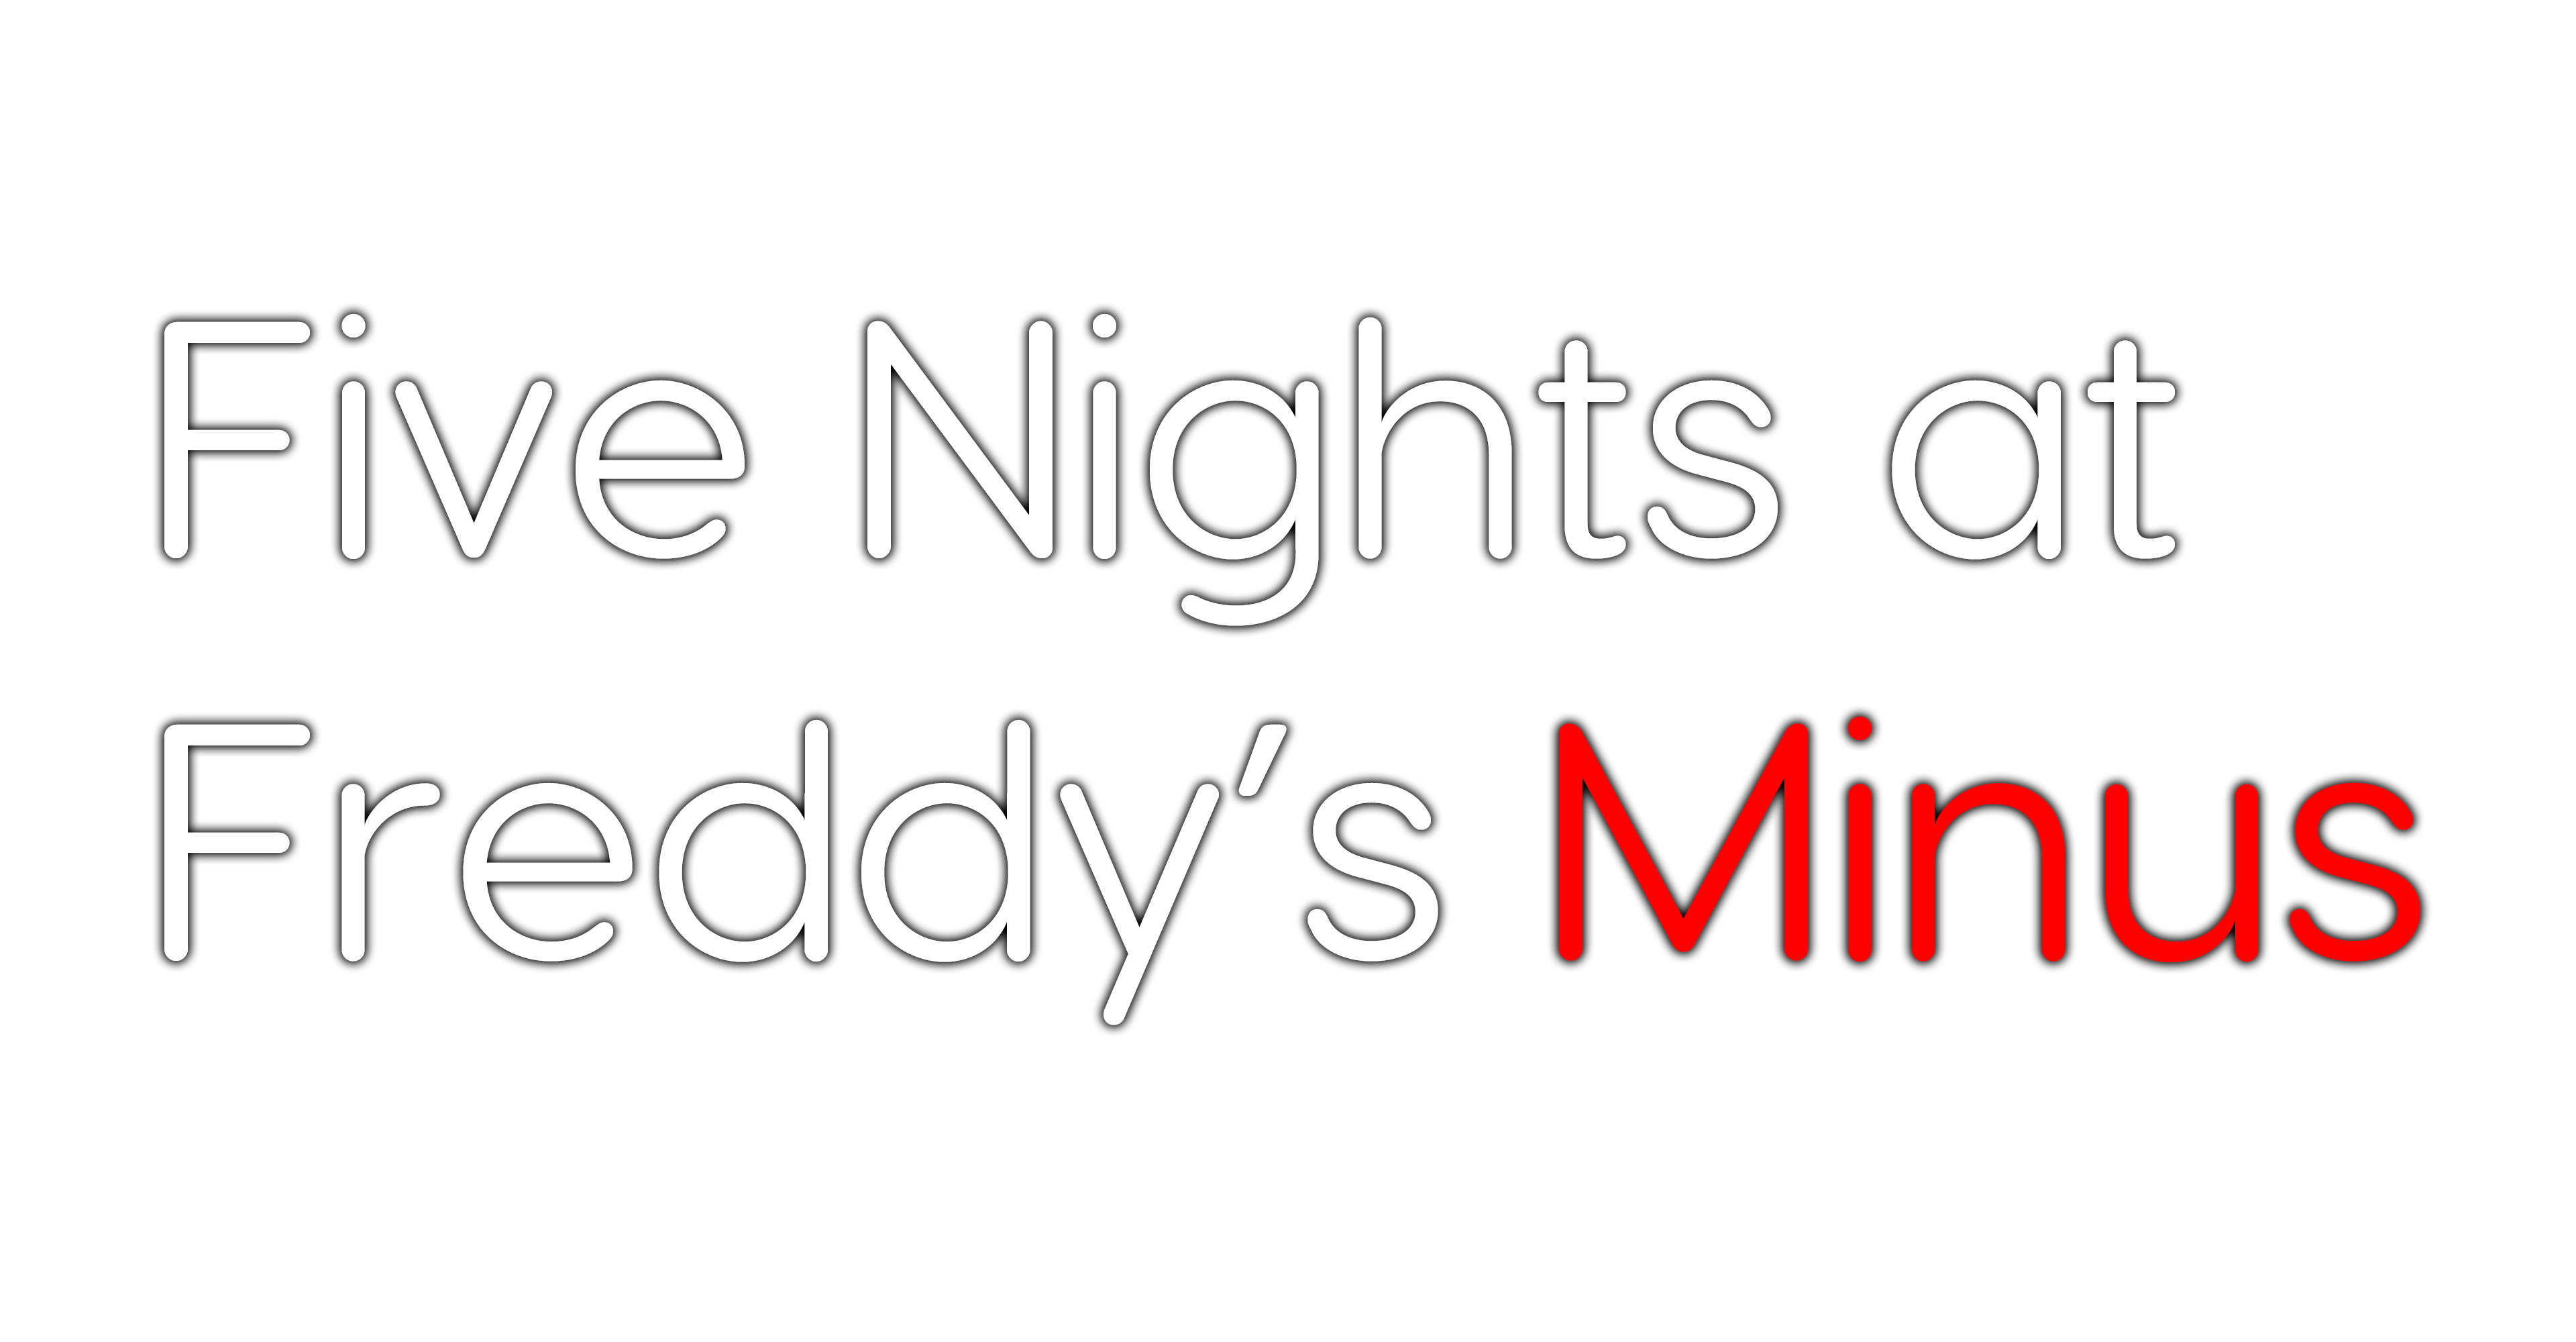 Five Nights at Freddy's Minus